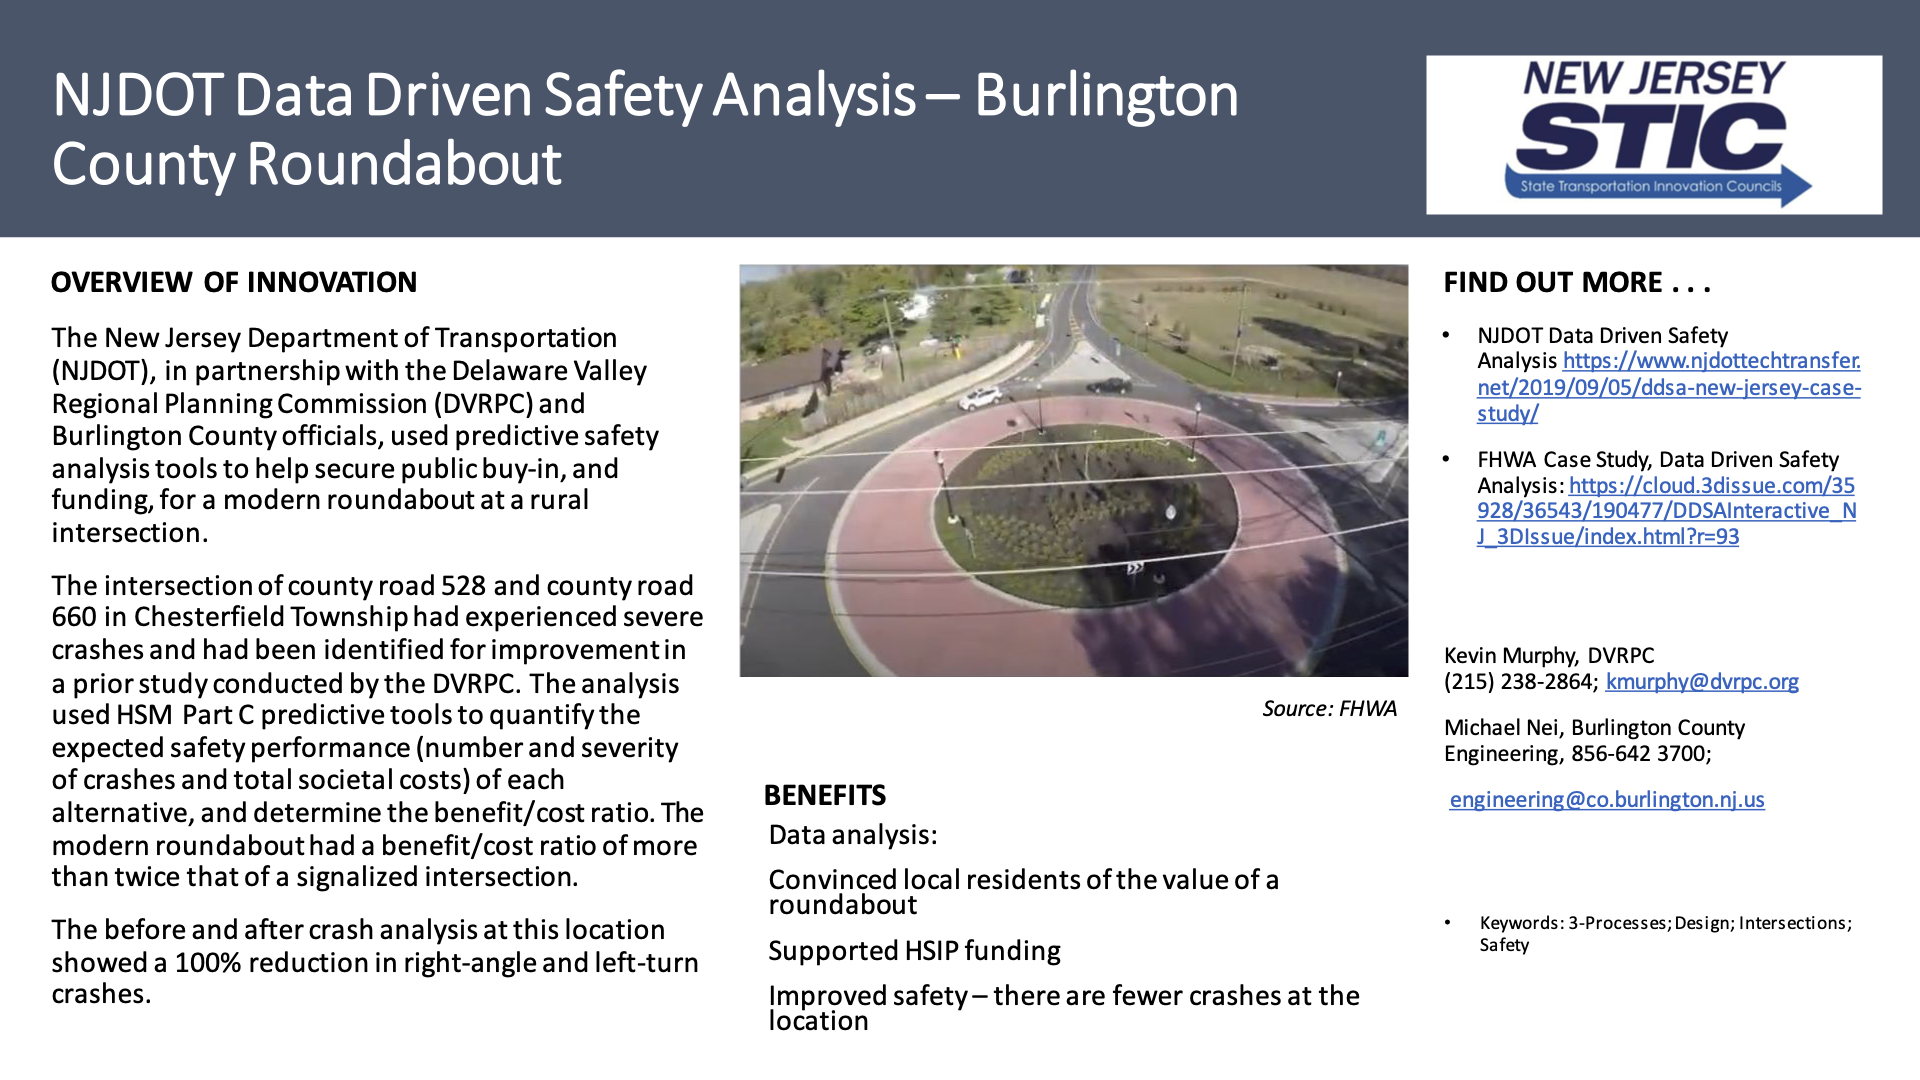 DDSA NJDOT Data Driven Safety Analysis – Burlington County Roundabout